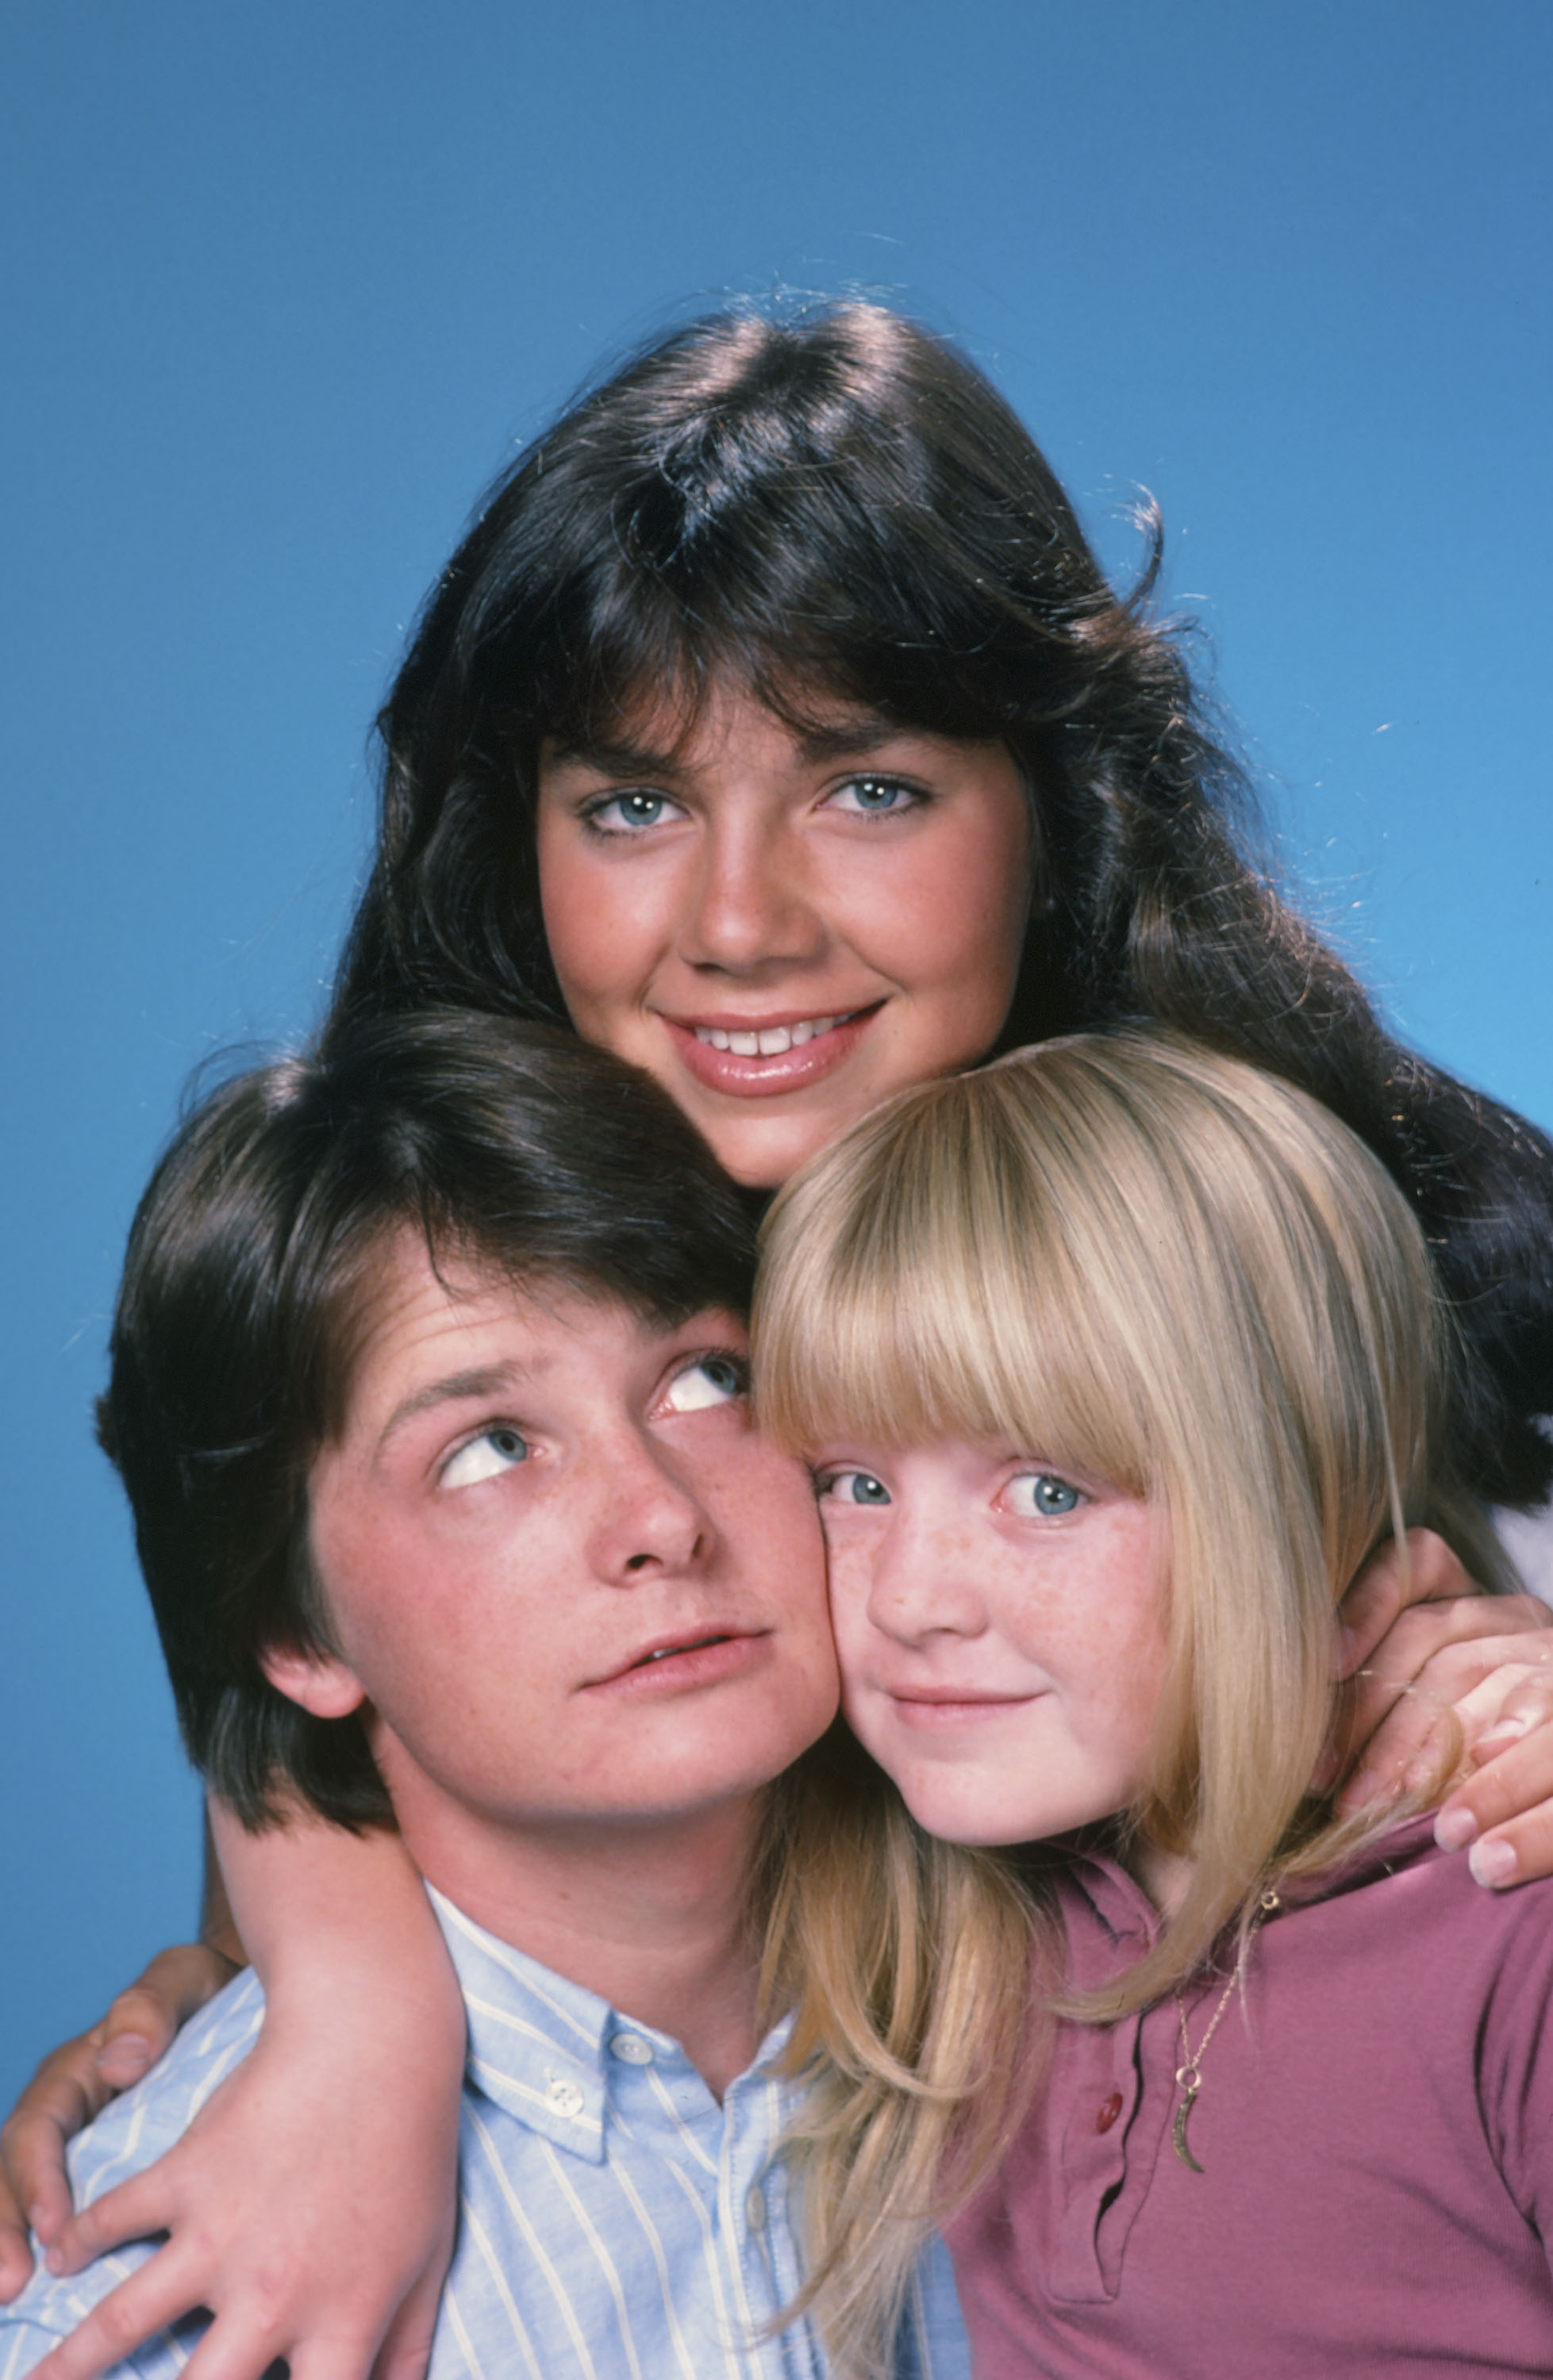 Michael J. Fox, Justine Bateman y Tina Yothers en "Family Ties", circa 1980s | Foto: Getty Images